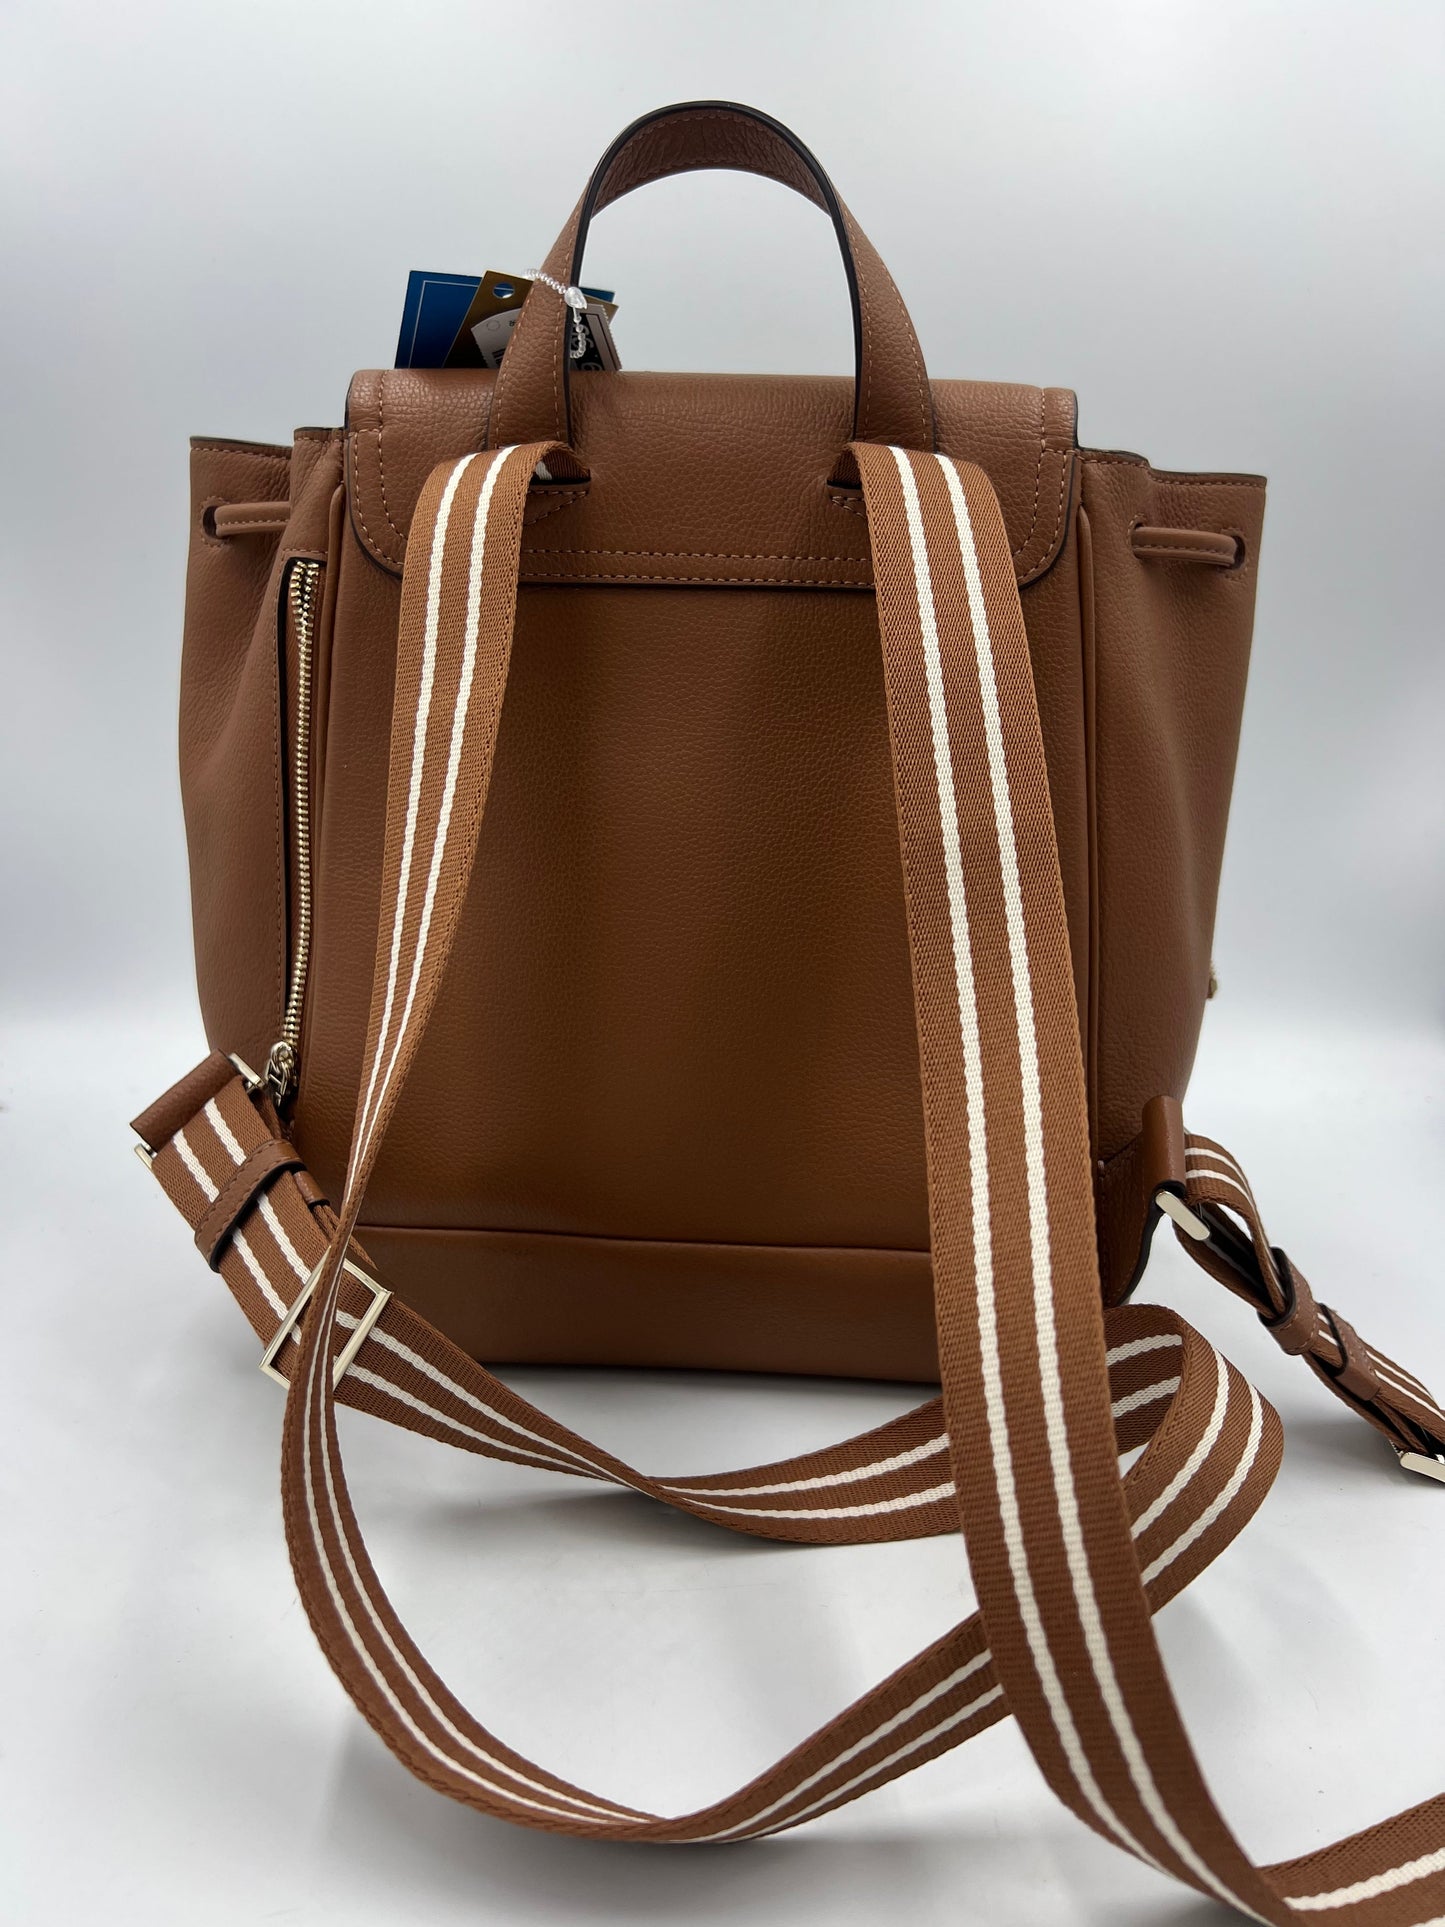 Like New! Kate Spade Leather Backpack